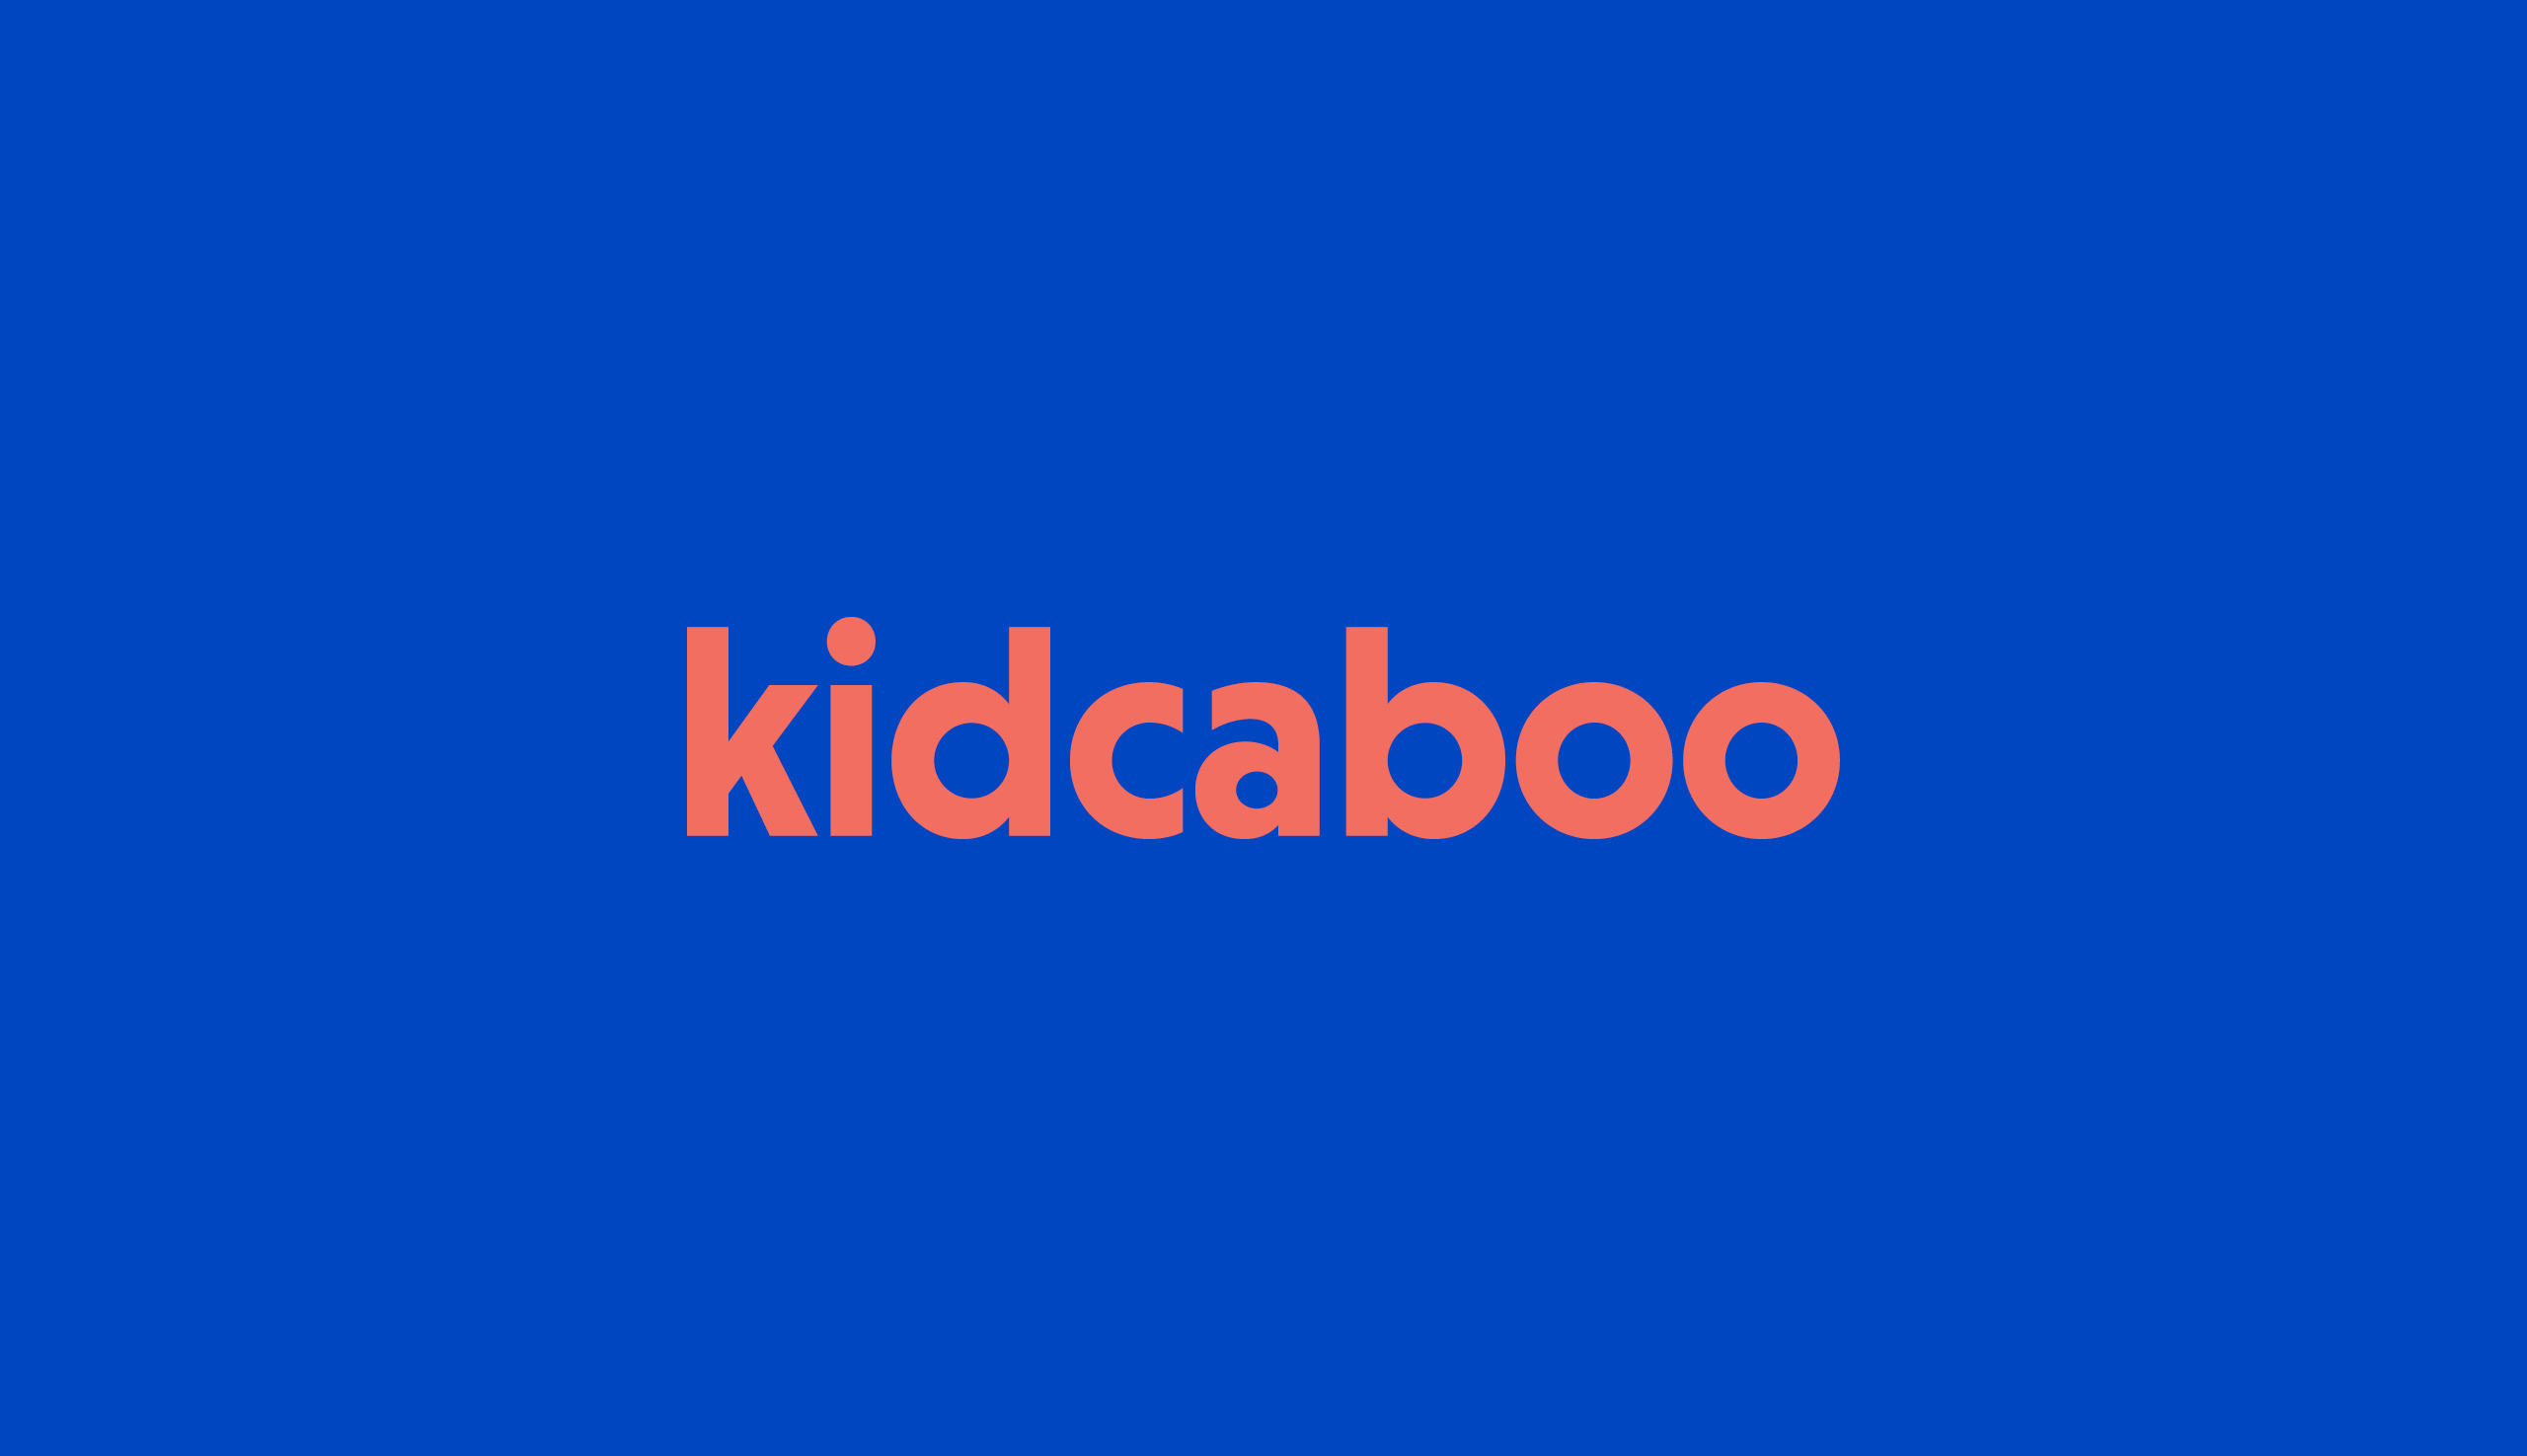 kidcaboo-case-study-02